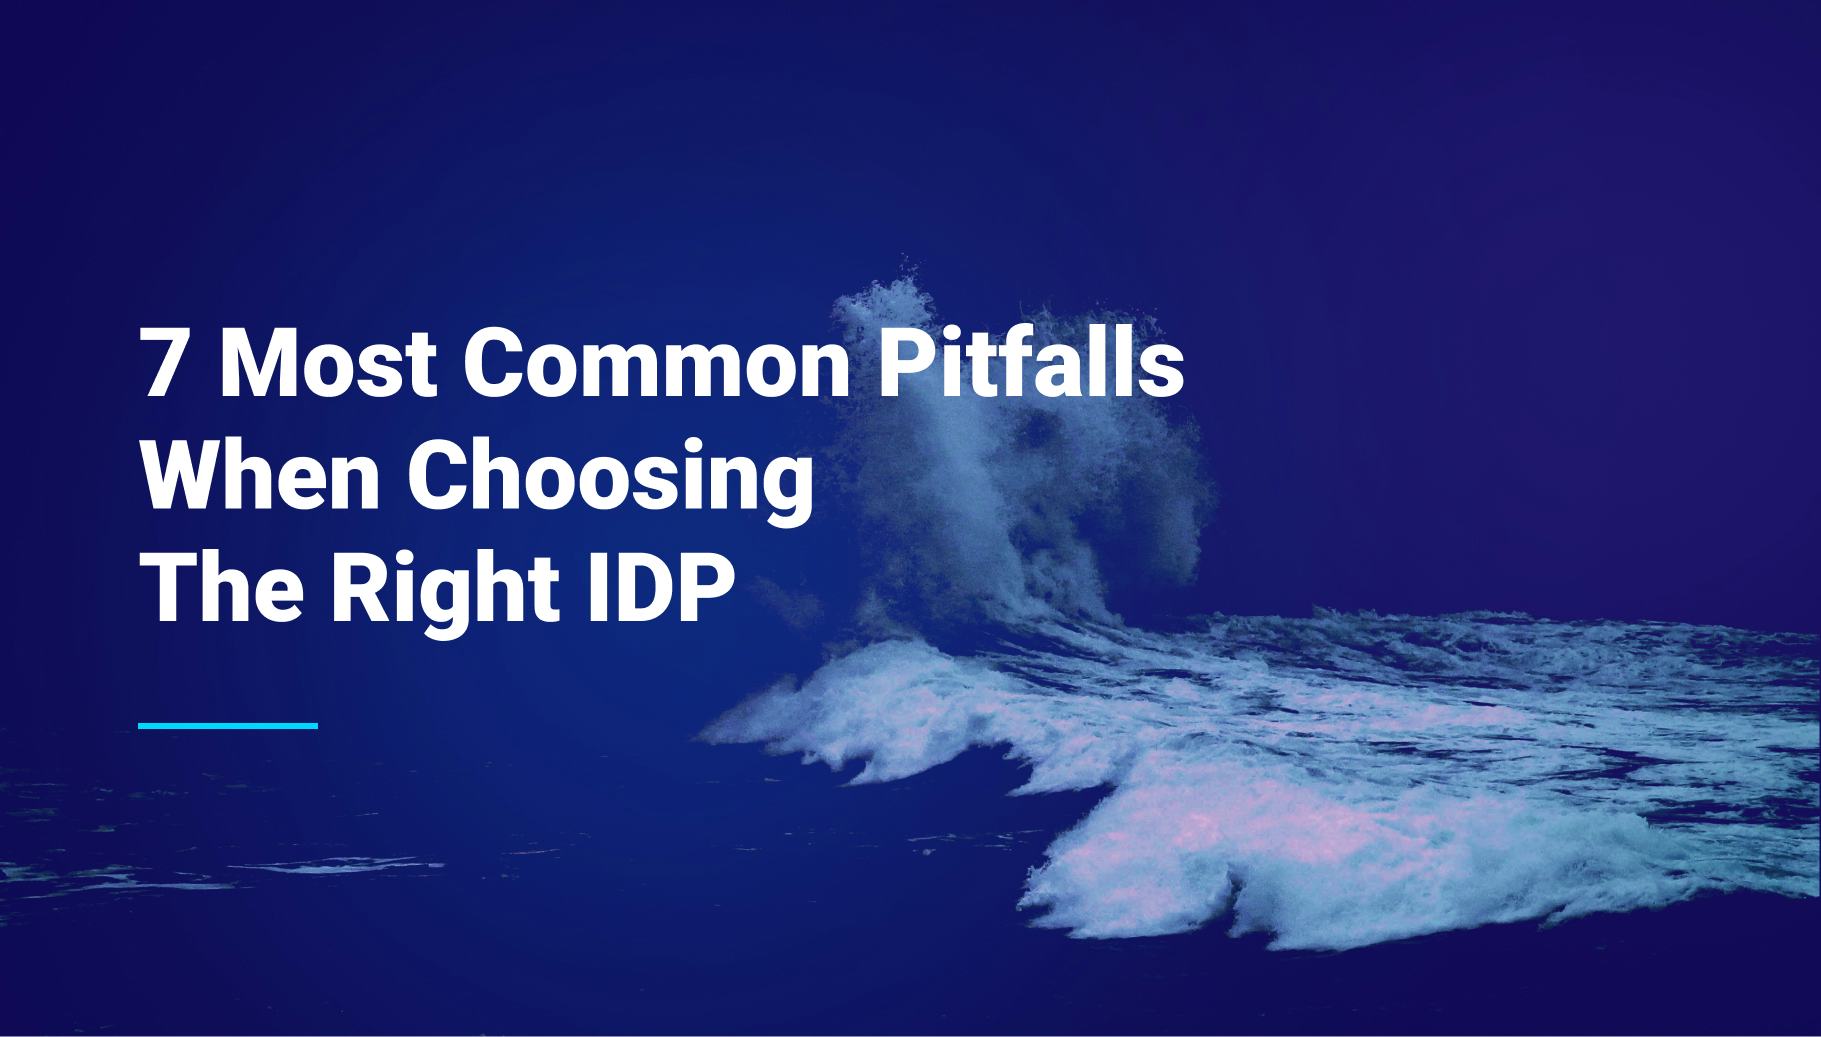 7 Most Common Pitfalls When Choosing the Right Internal Developer Platform - Qovery